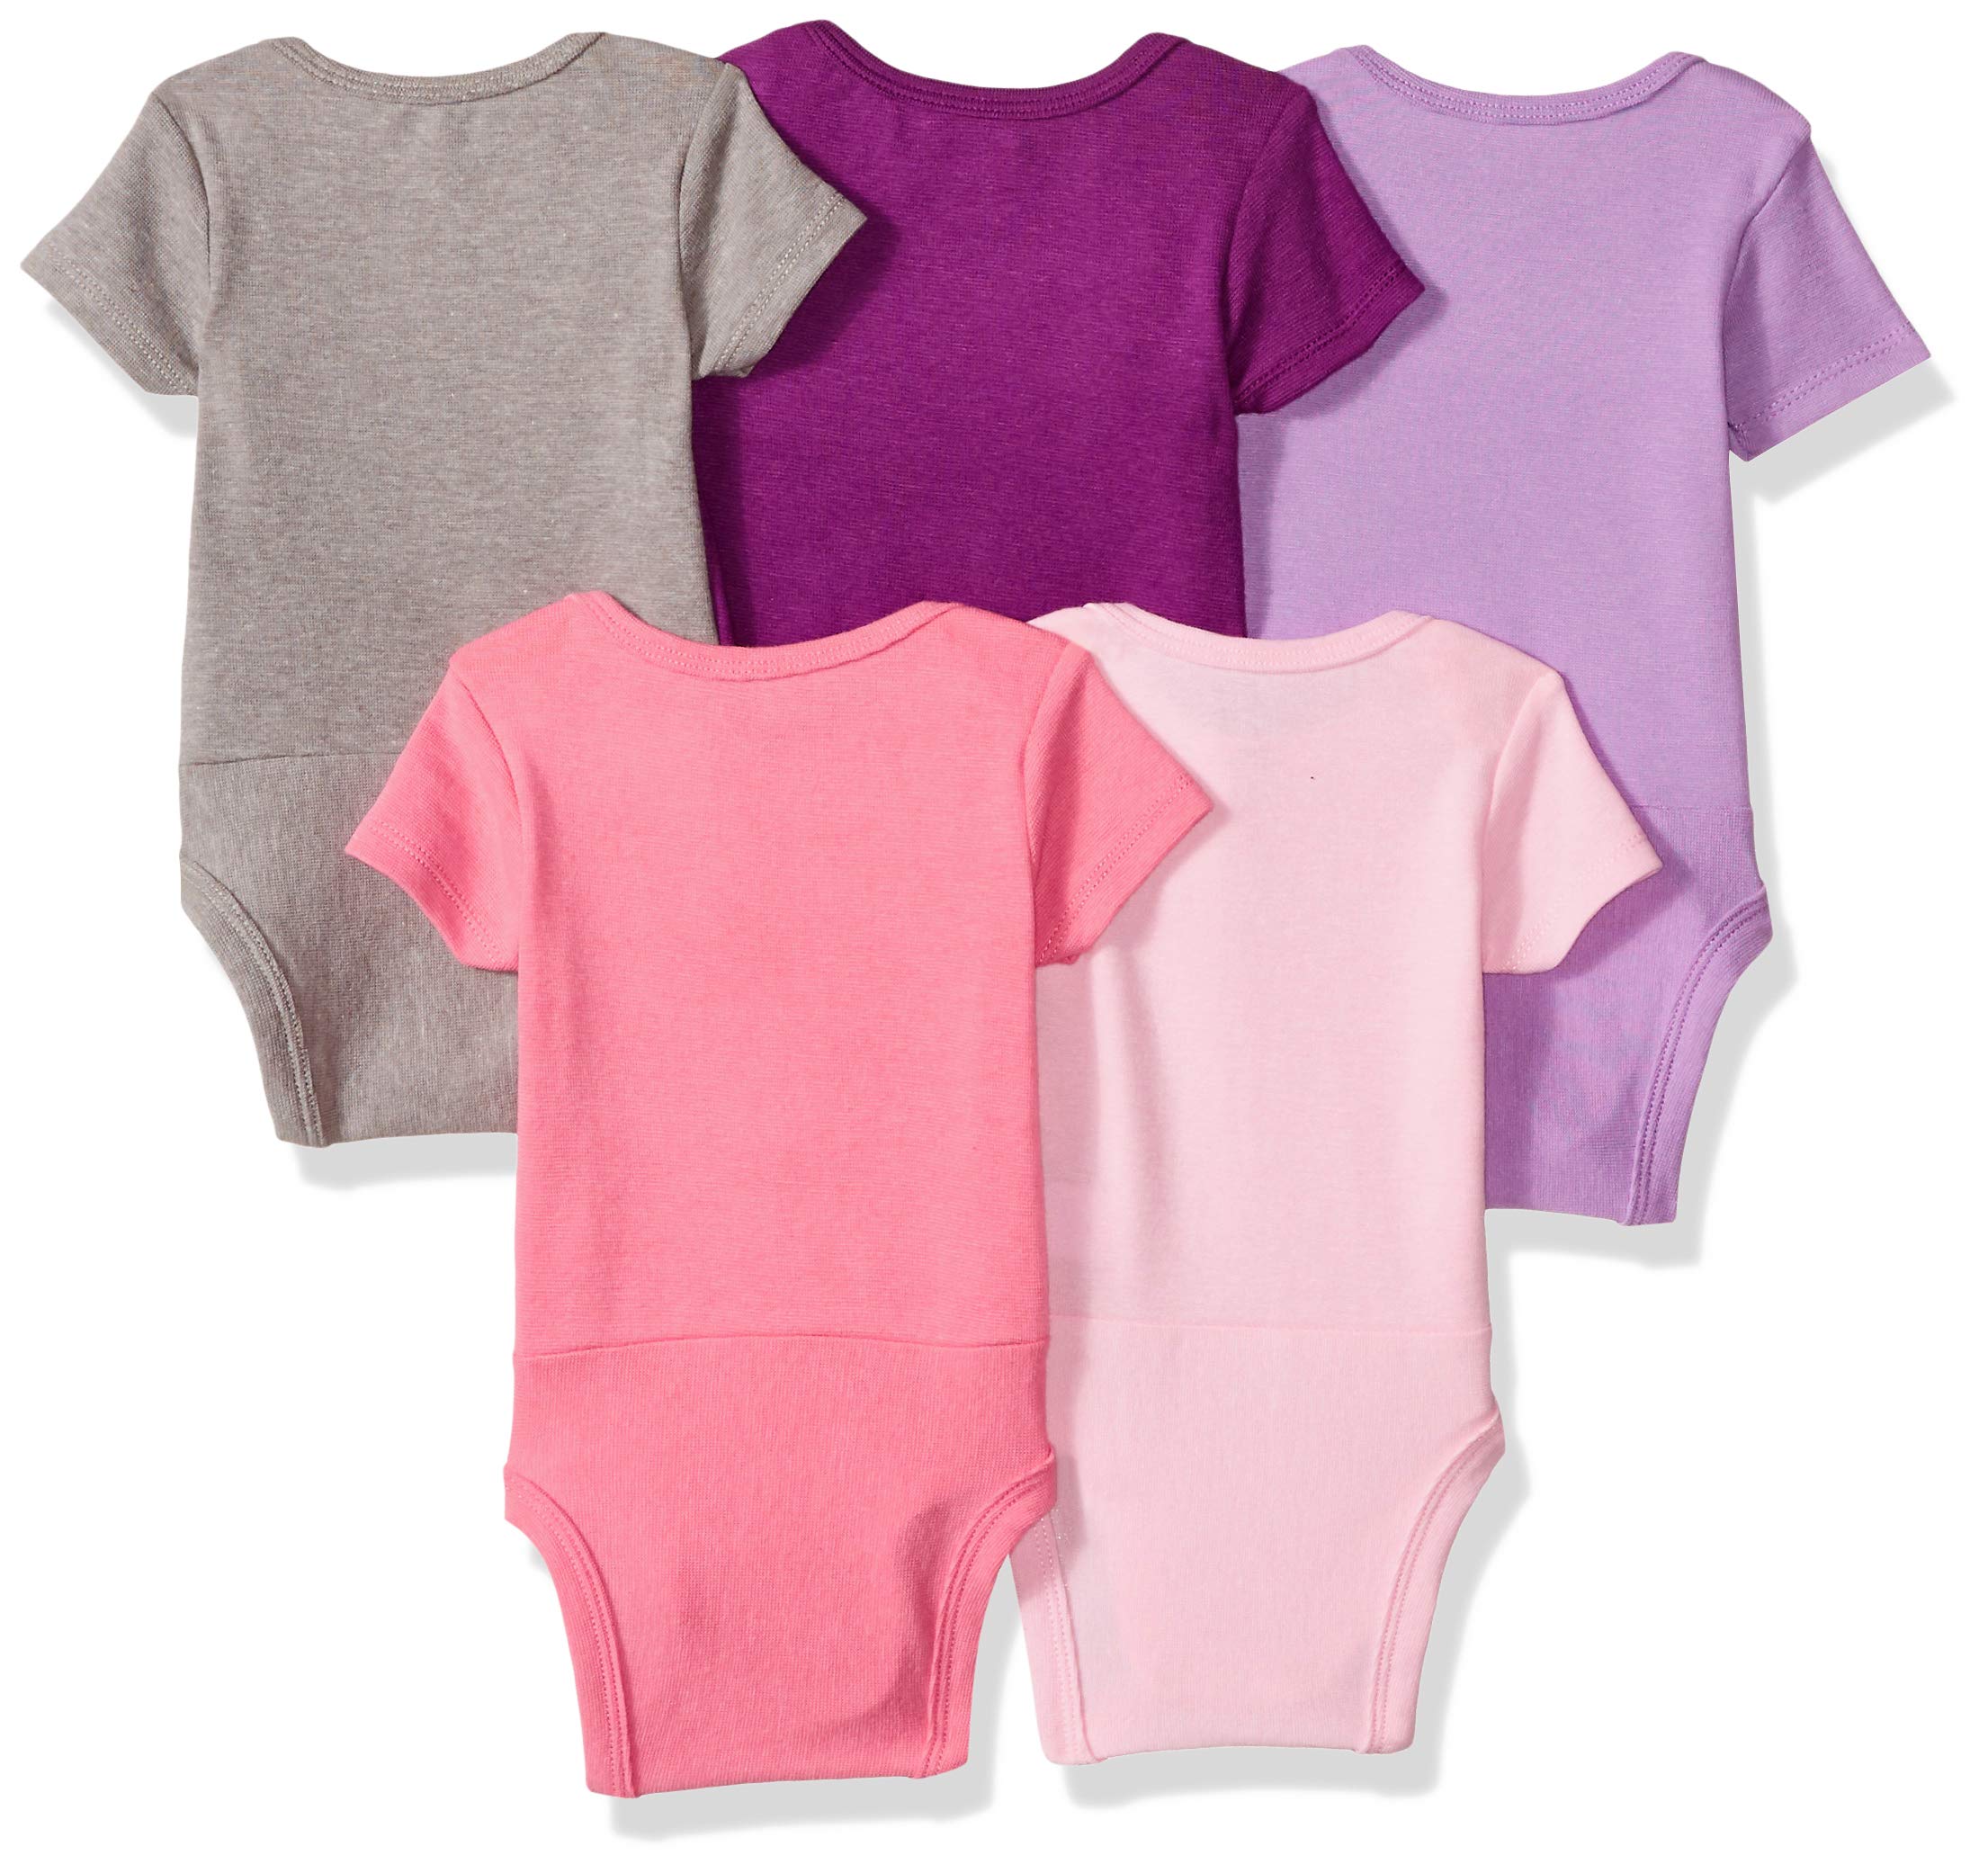 Hanes Baby Bodysuits, Ultimate Flexy Short Sleeve for Boys & Girls, 5-Pack